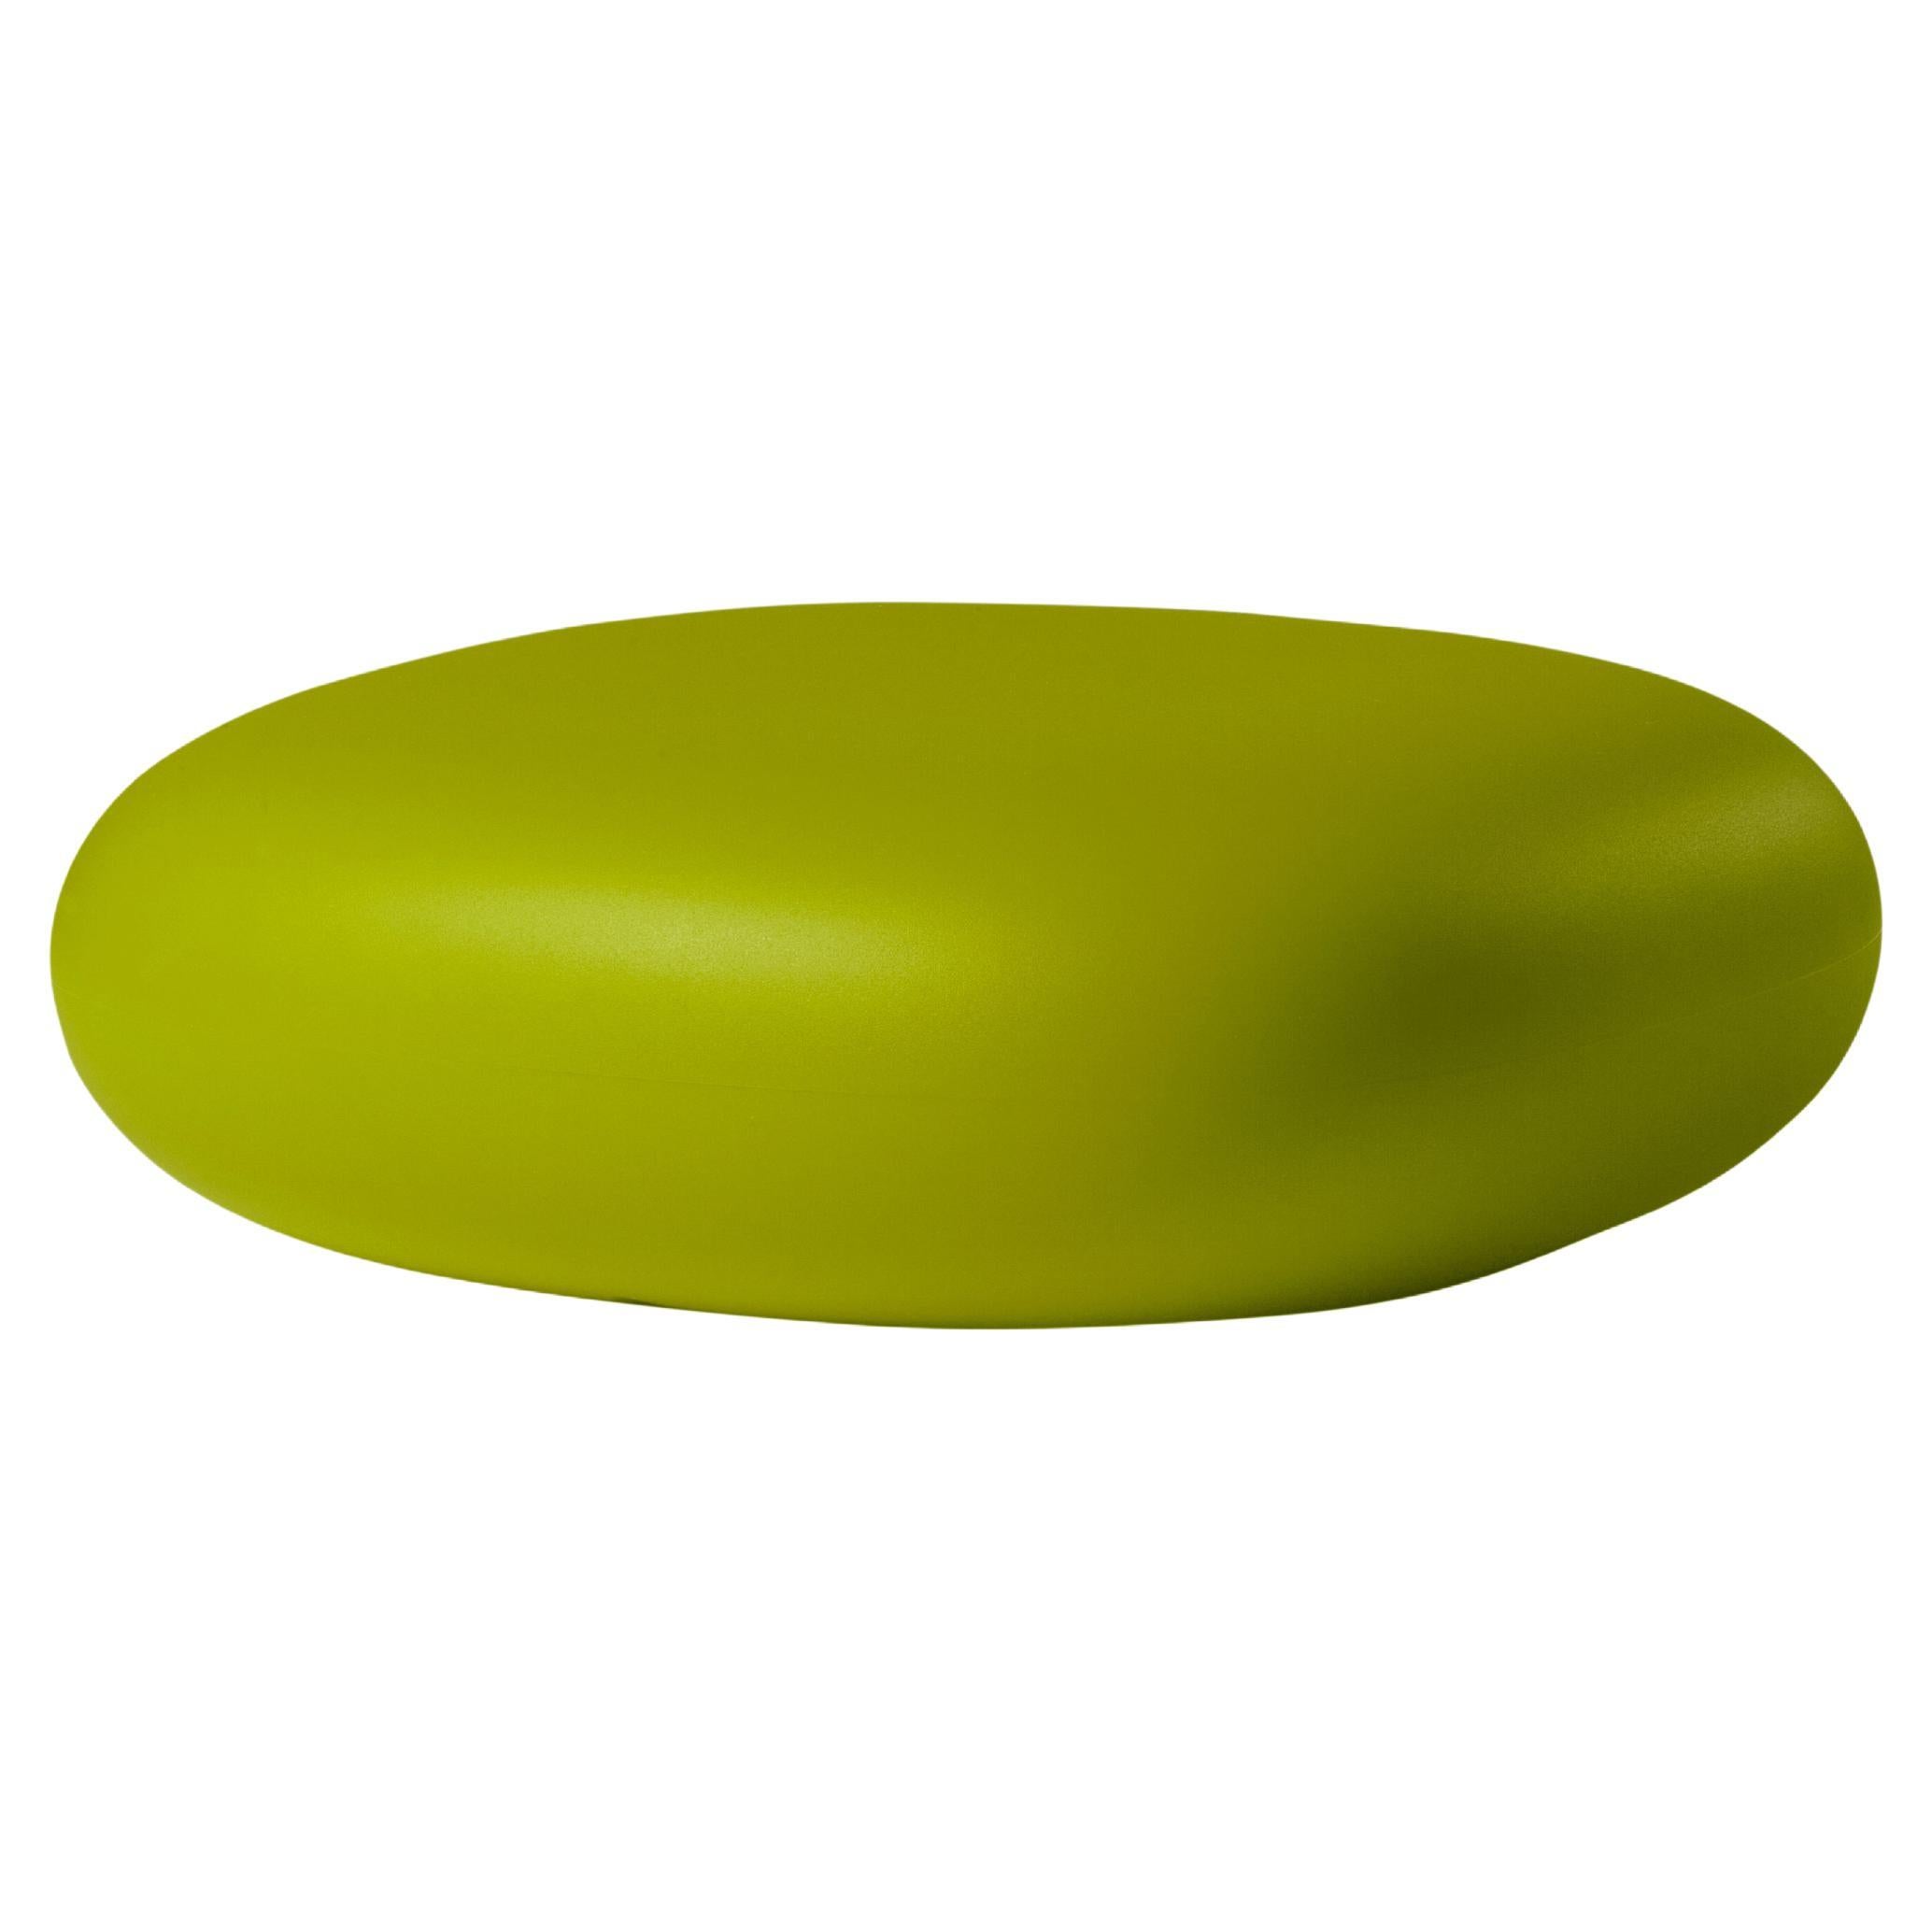 Slide Design Chubby Low Pouf in Lime Green by Marcel Wanders